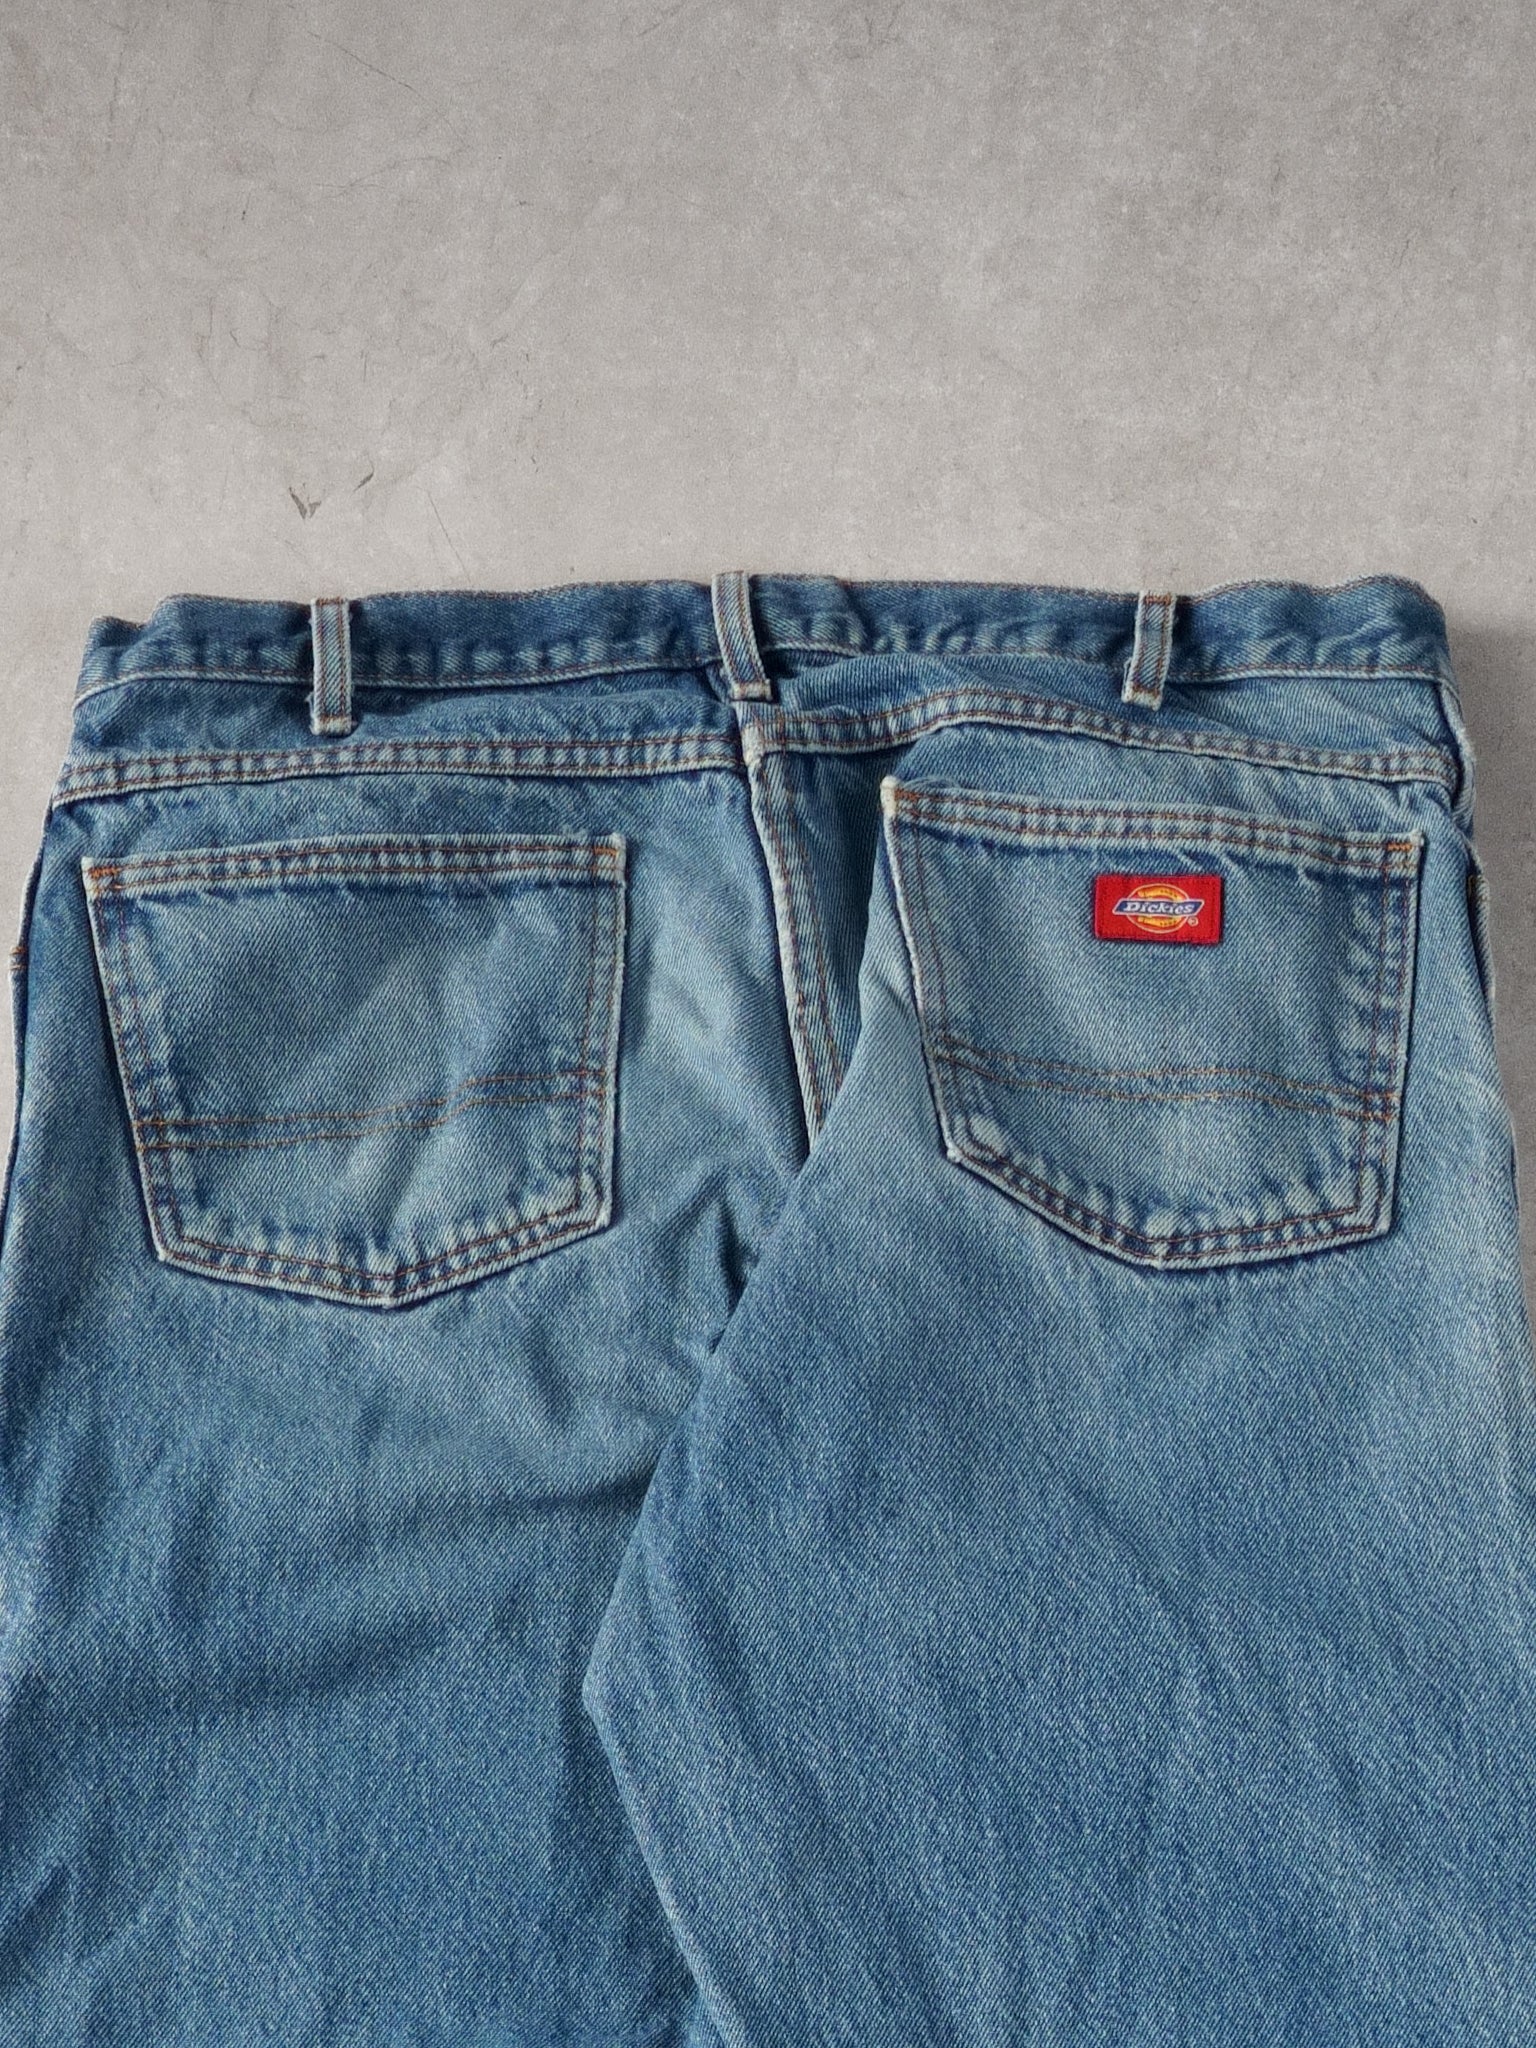 Vintage 90s Light Blue Dickies Workwear Denim Jeans (36x29)